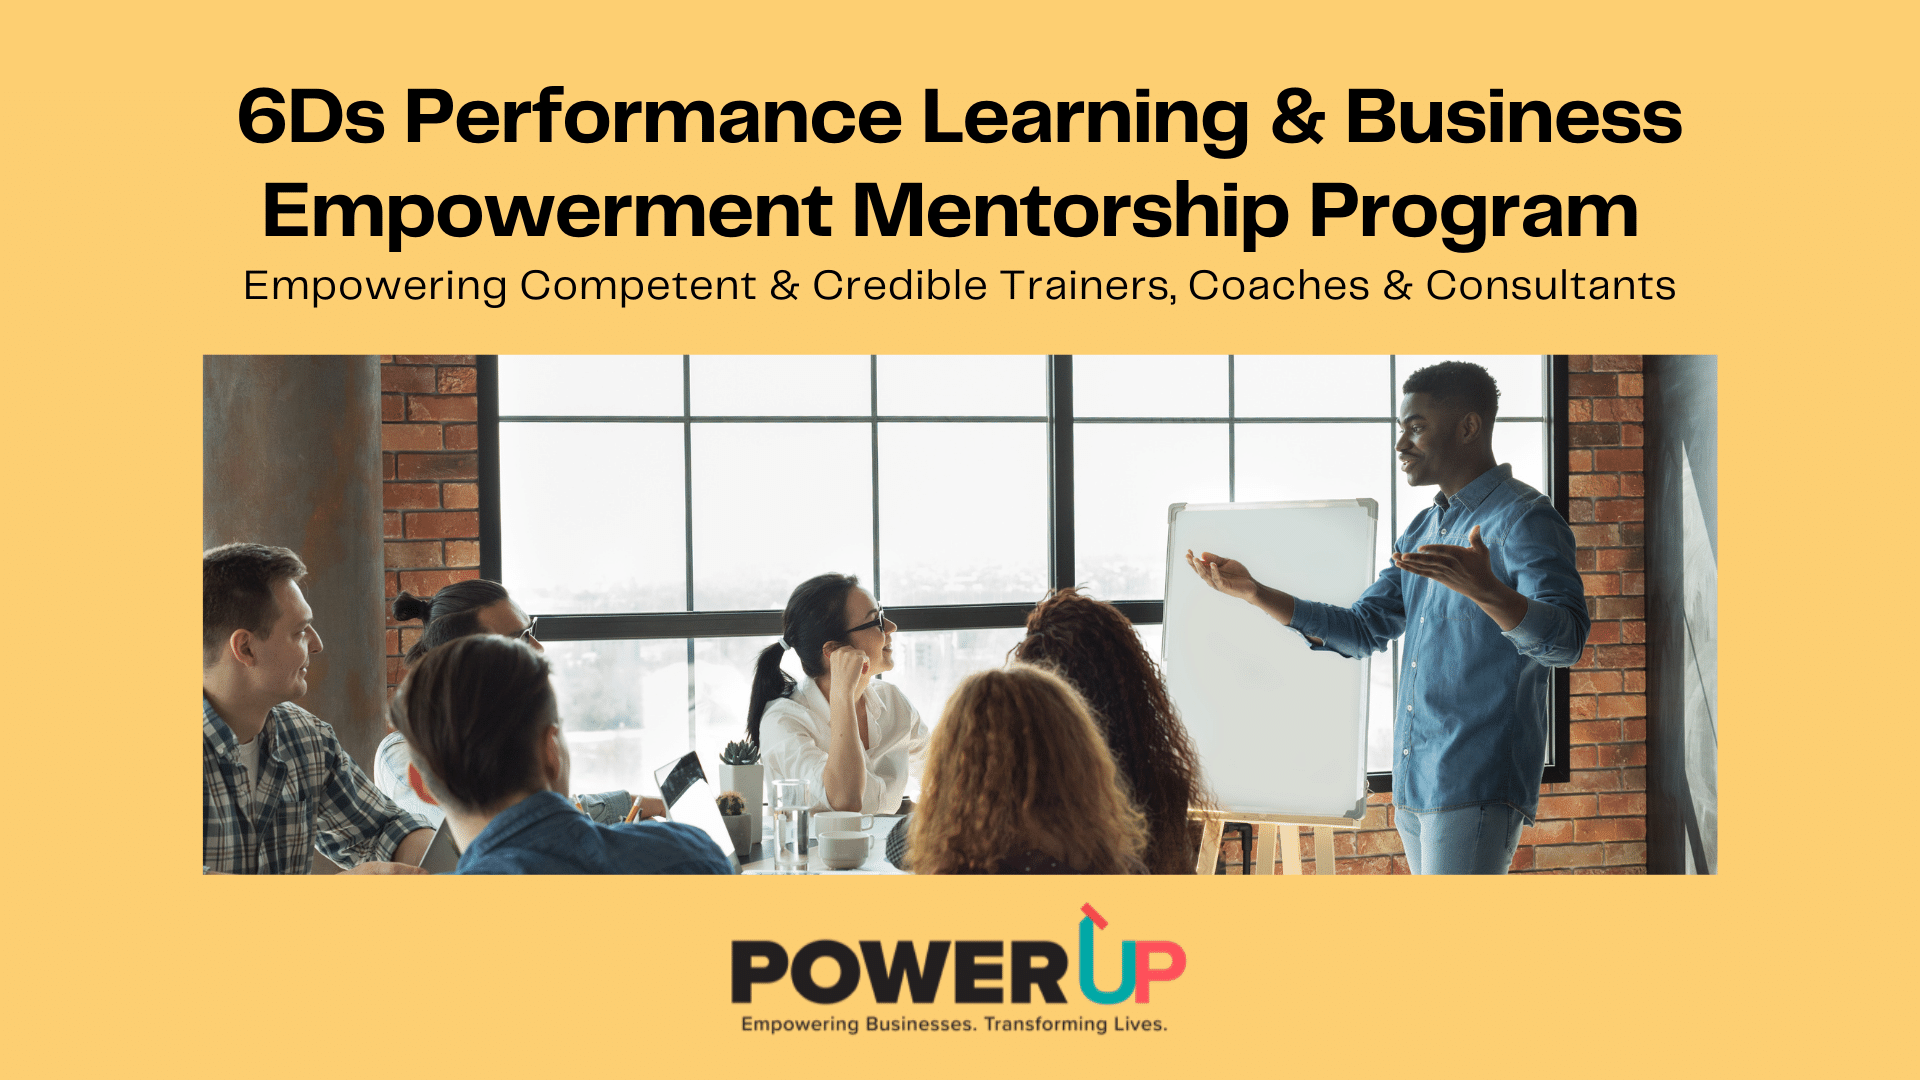 6Ds Performance Learning & Business Empowerment Mentorship Program